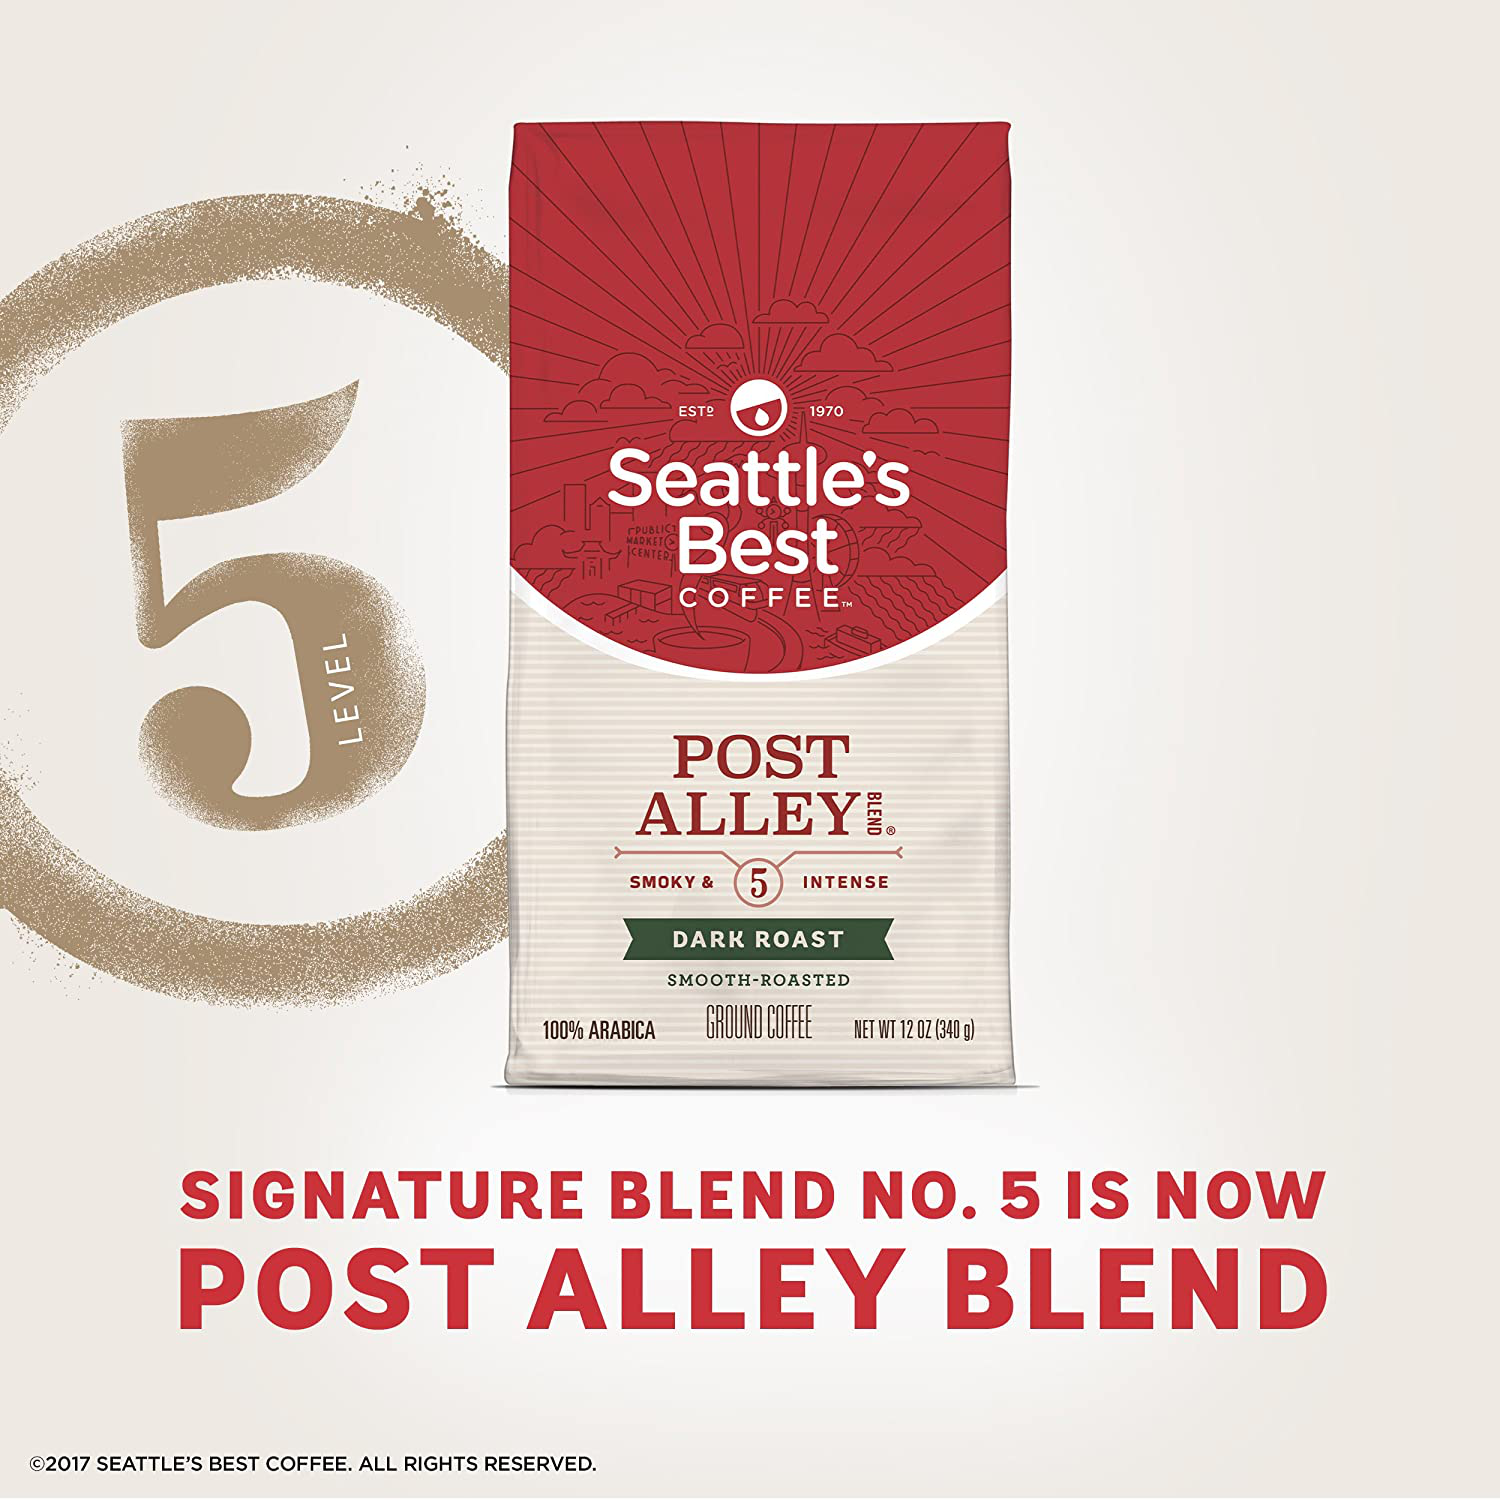 Seattle's Best Coffee Toasted Hazelnut Flavored Medium Roast Ground Coffee, 12 Ounce (Pack of 1)